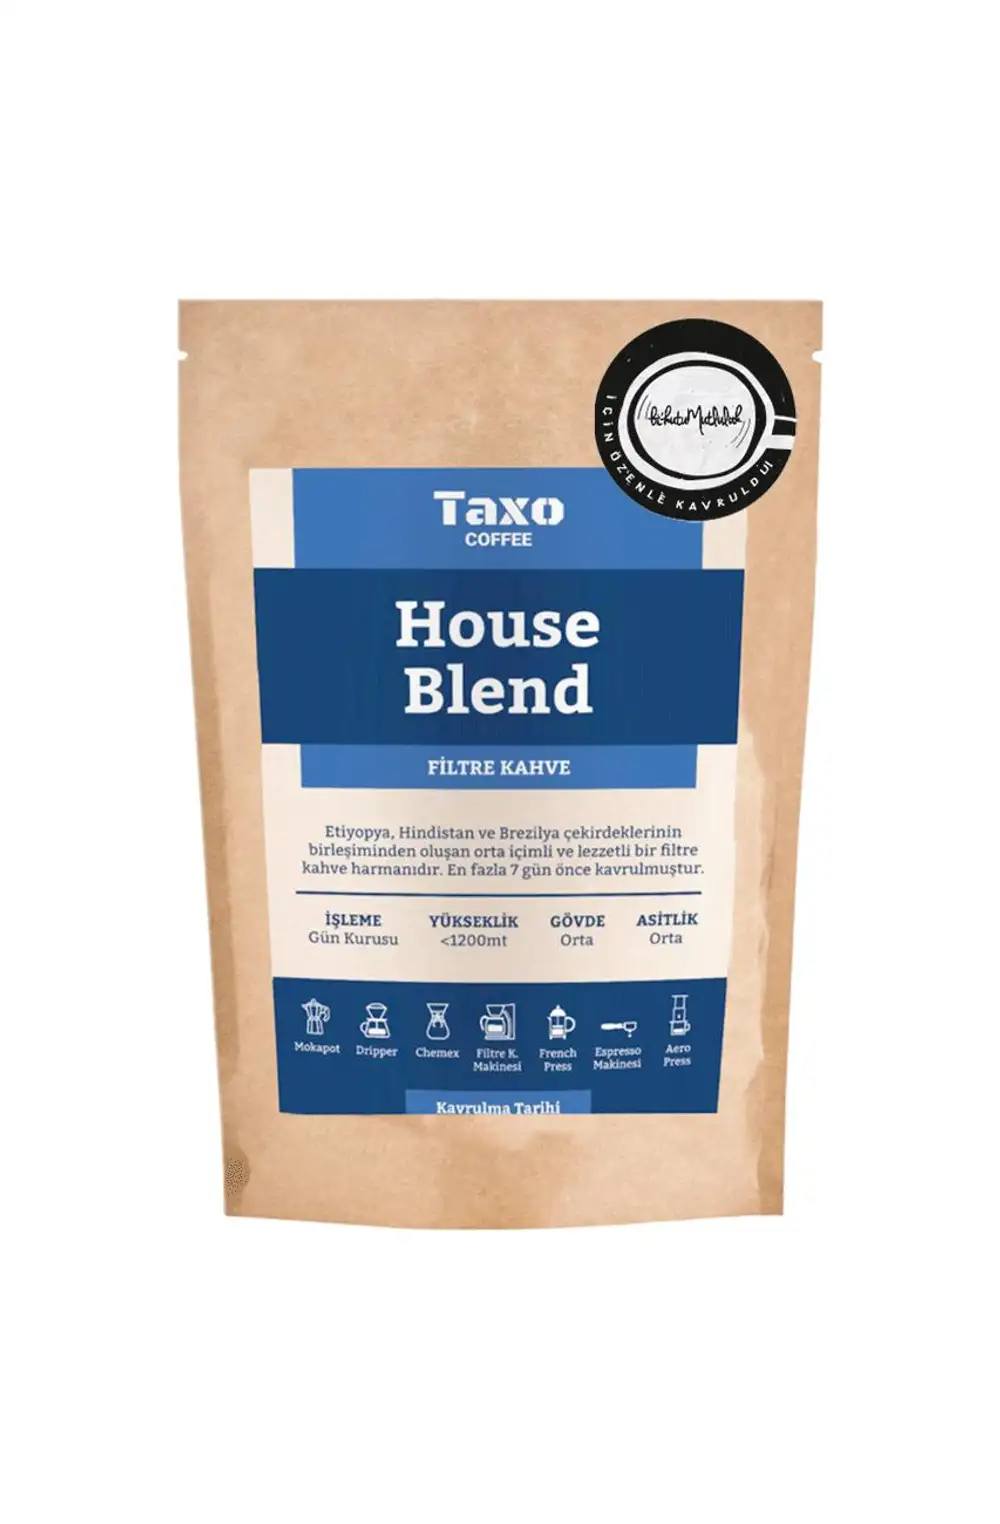 Filtre Kahve - House Blend Taxo Coffee 50 gr.